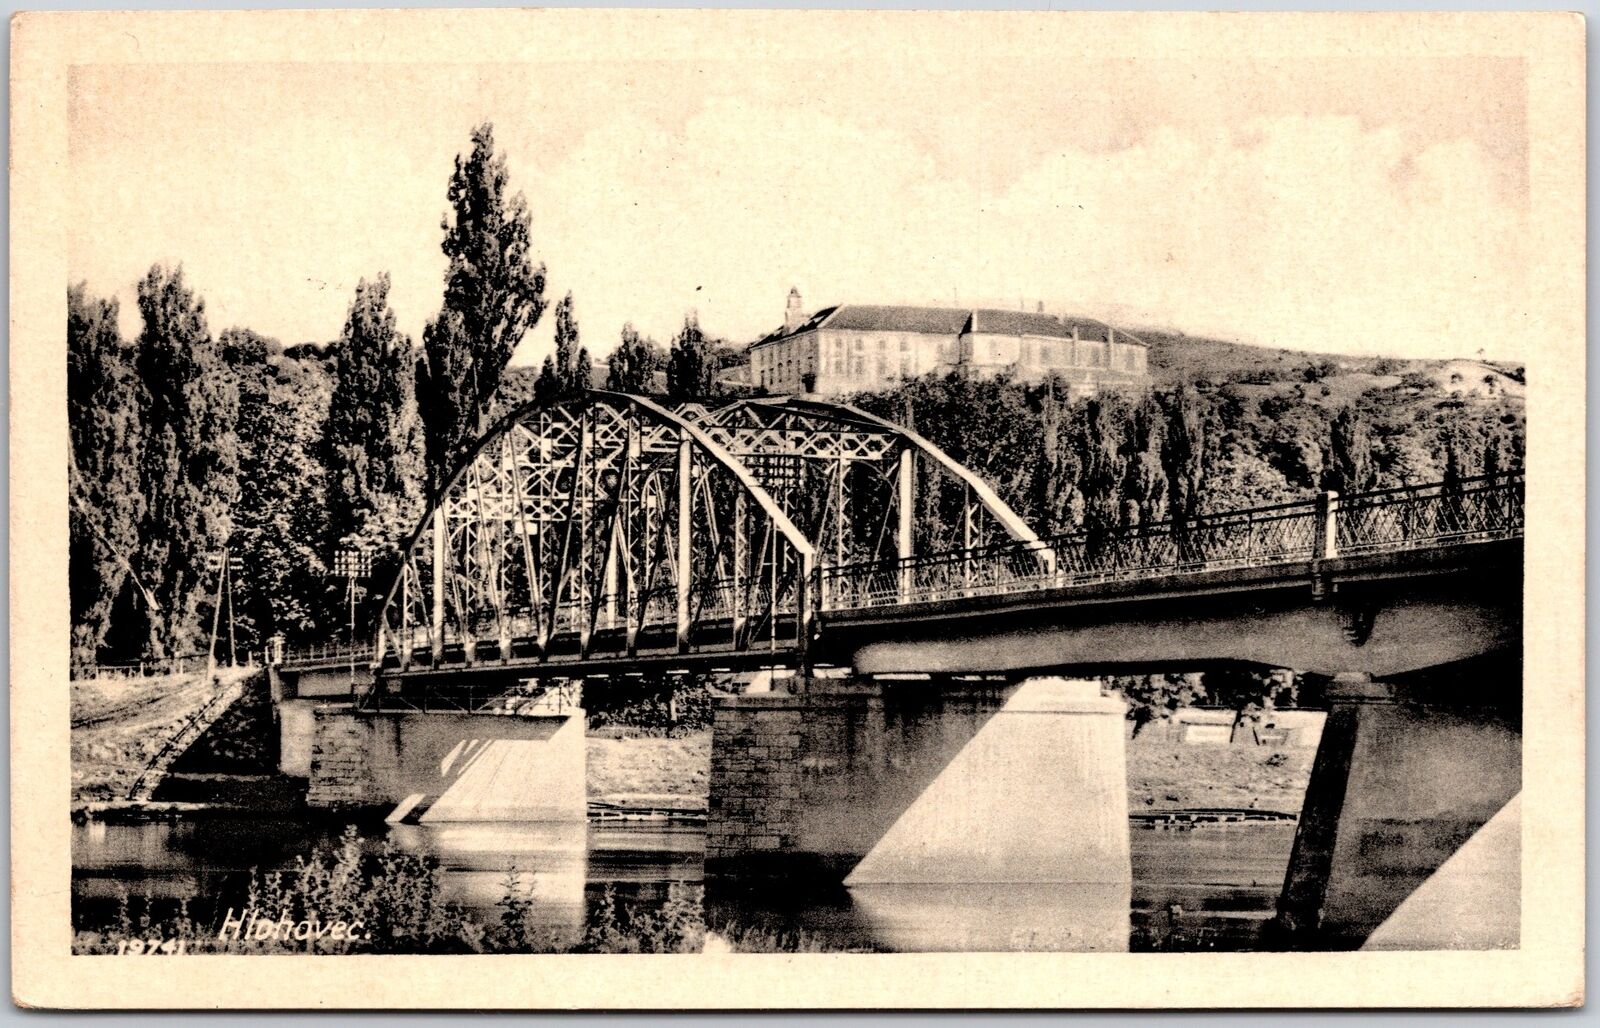 Hlohovec Slovakia Suspension Bridge Overlooking  the Building Postcard